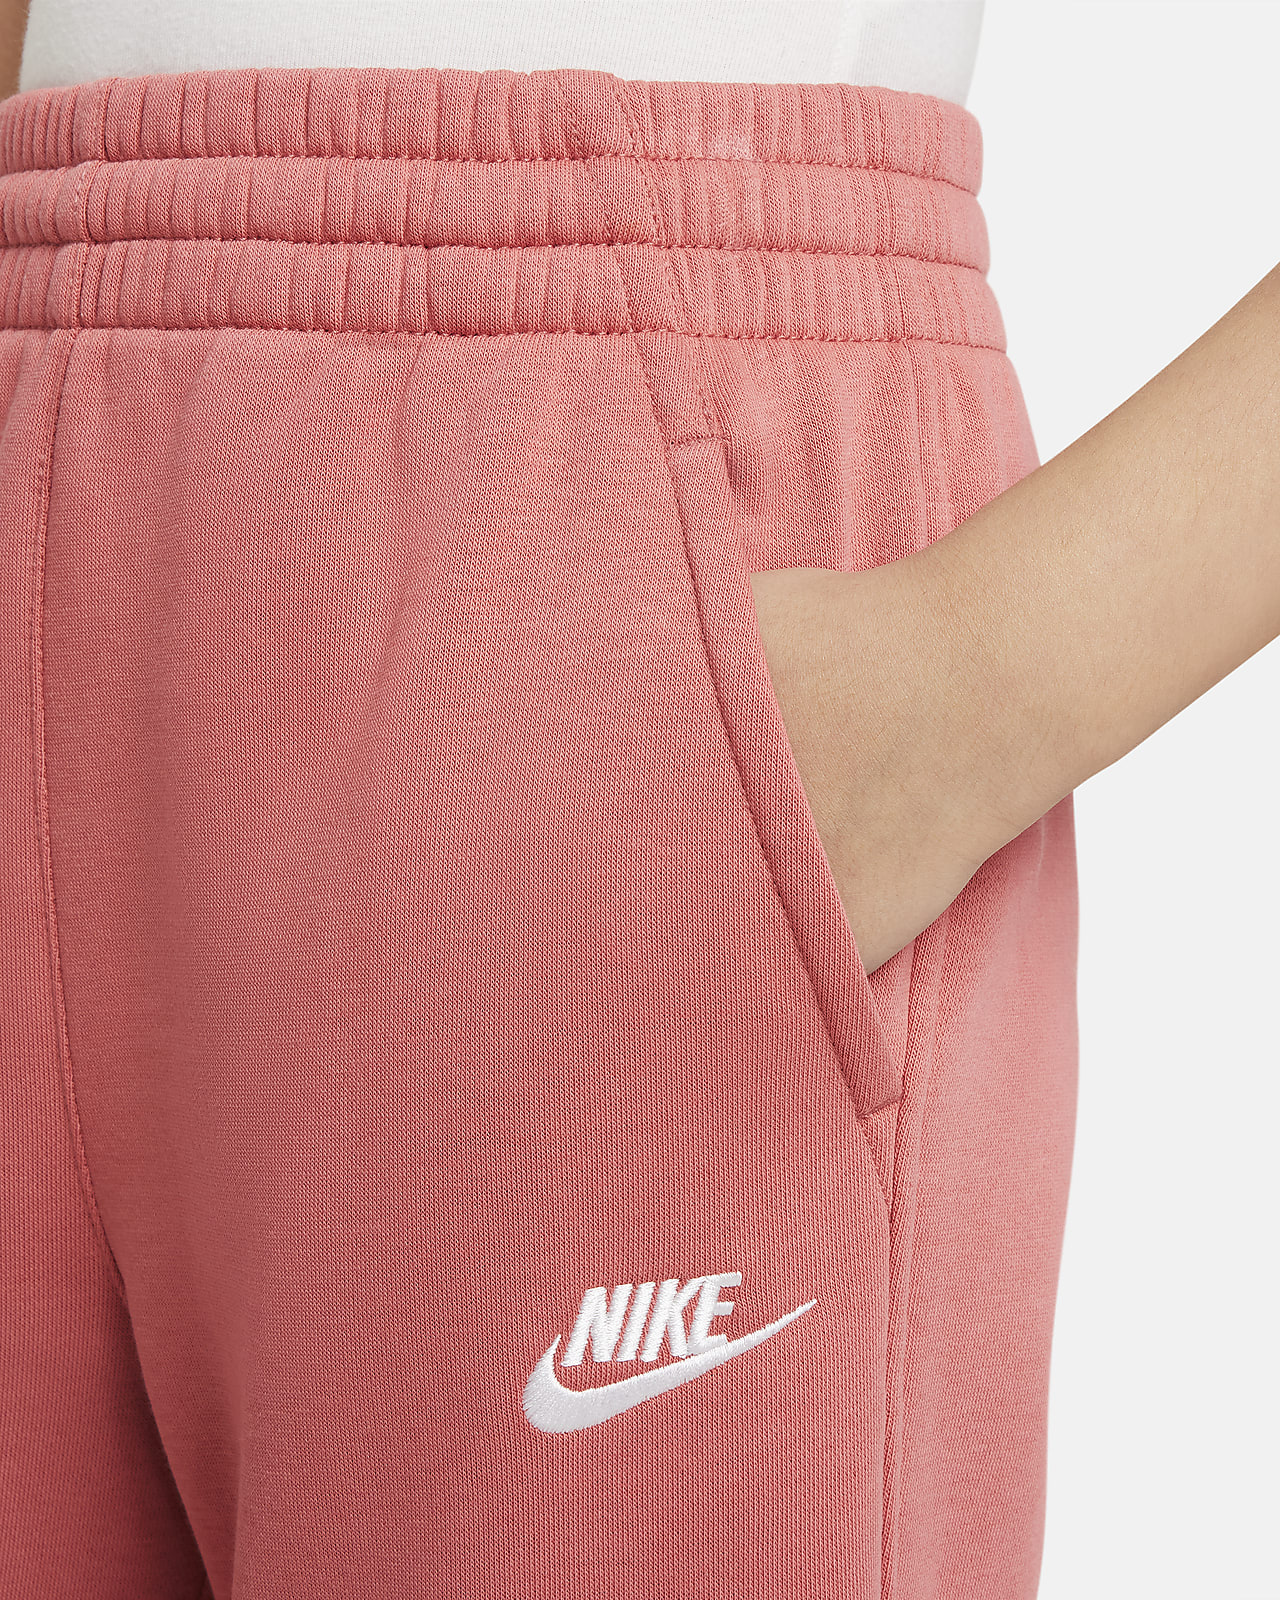 Nike Older Girls Trend Fleece Leggings - Purple